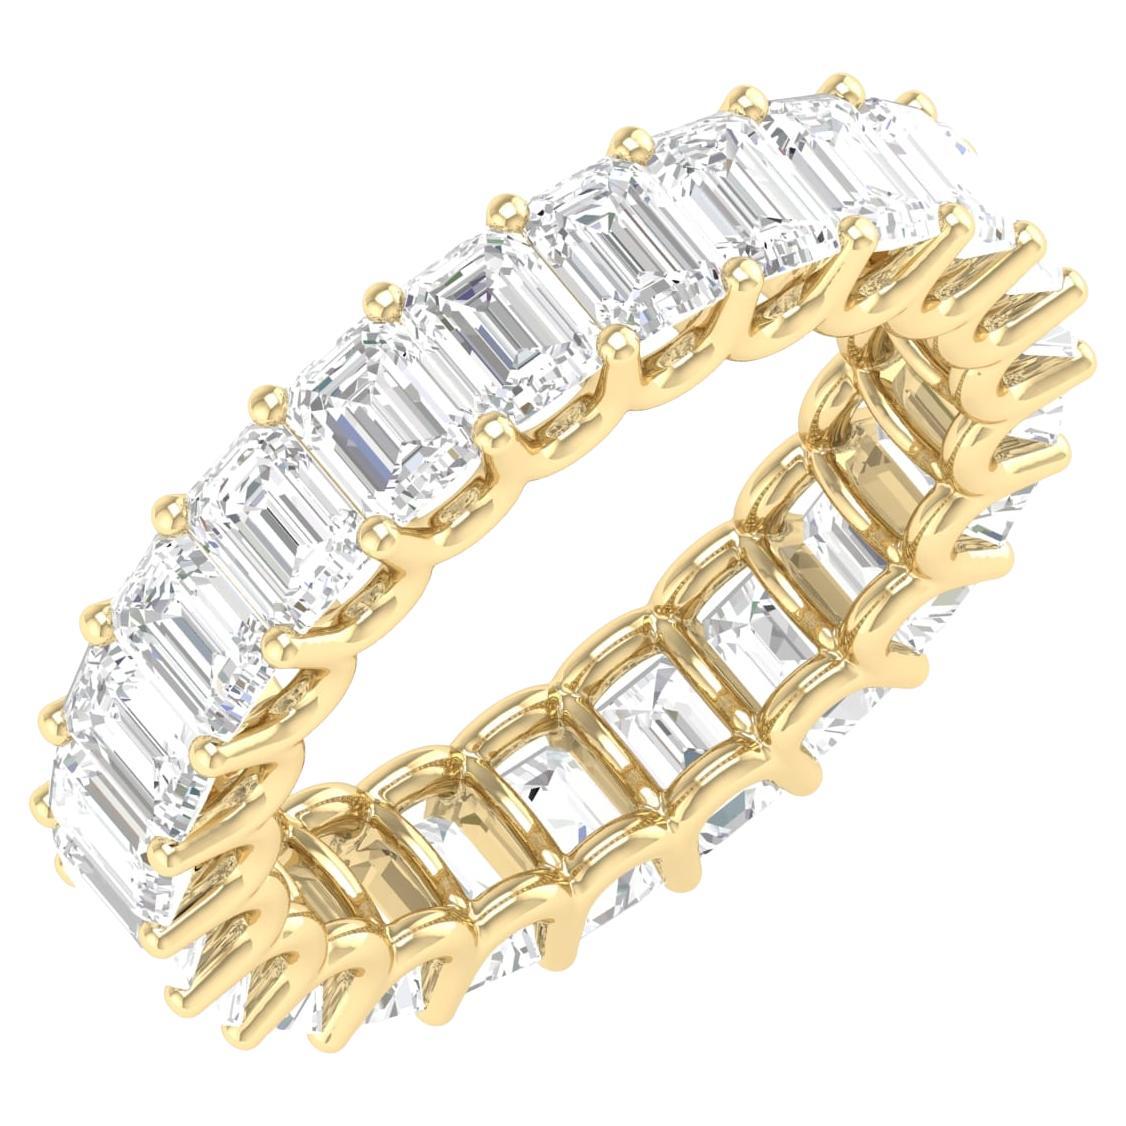 18 Karat Yellow Gold 5.39 Carat Diamond Solitaire Ring For Sale